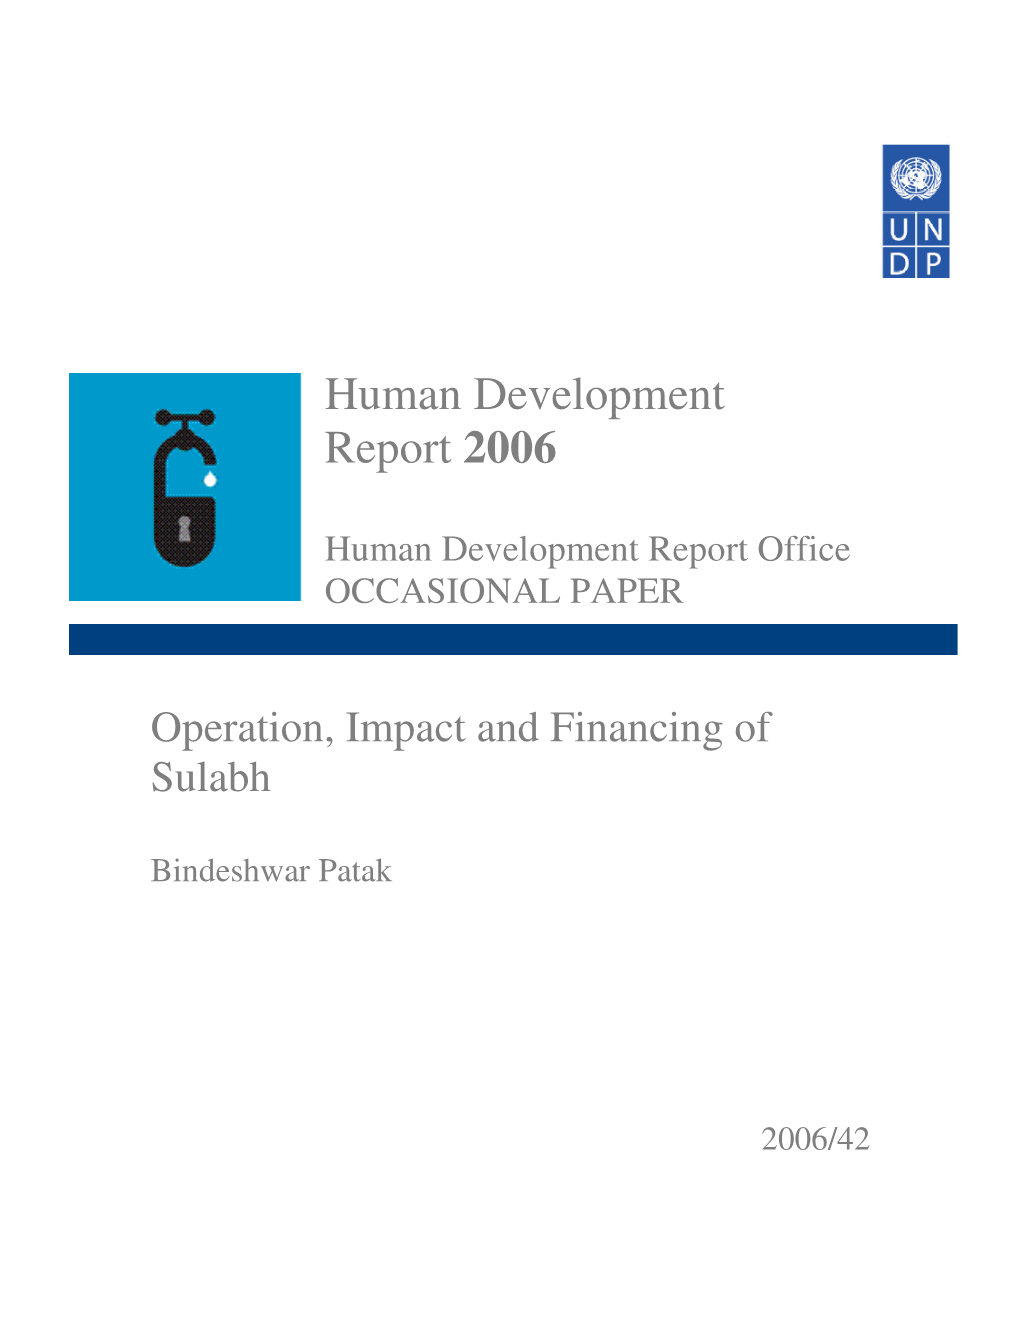 Human Development Report 2006